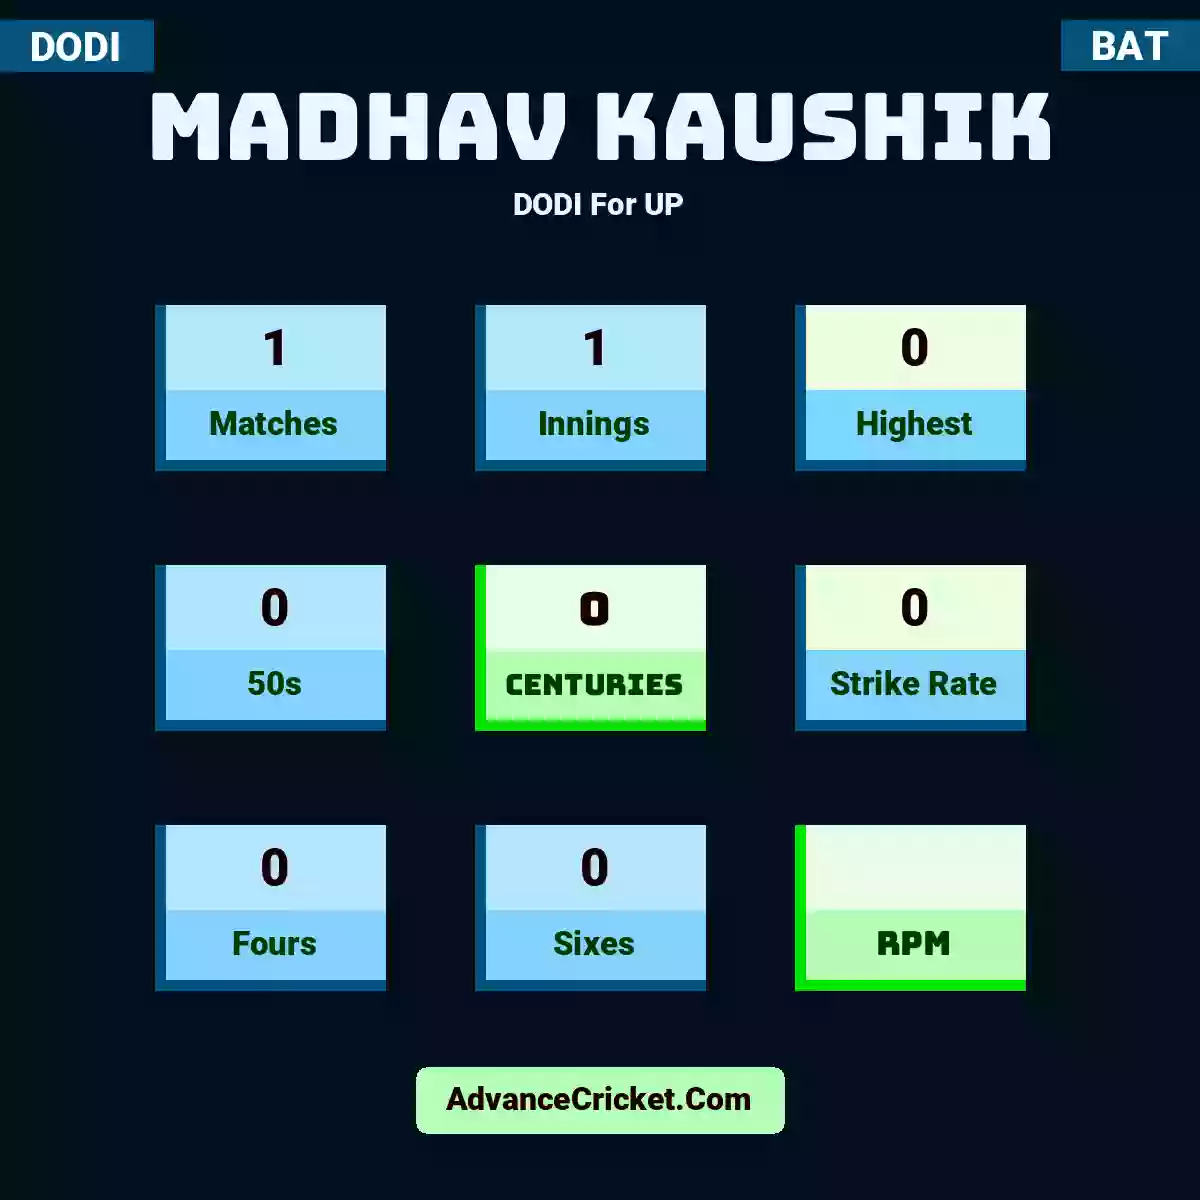 Madhav Kaushik DODI  For UP, Madhav Kaushik played 1 matches, scored 0 runs as highest, 0 half-centuries, and 0 centuries, with a strike rate of 0. M.Kaushik hit 0 fours and 0 sixes.